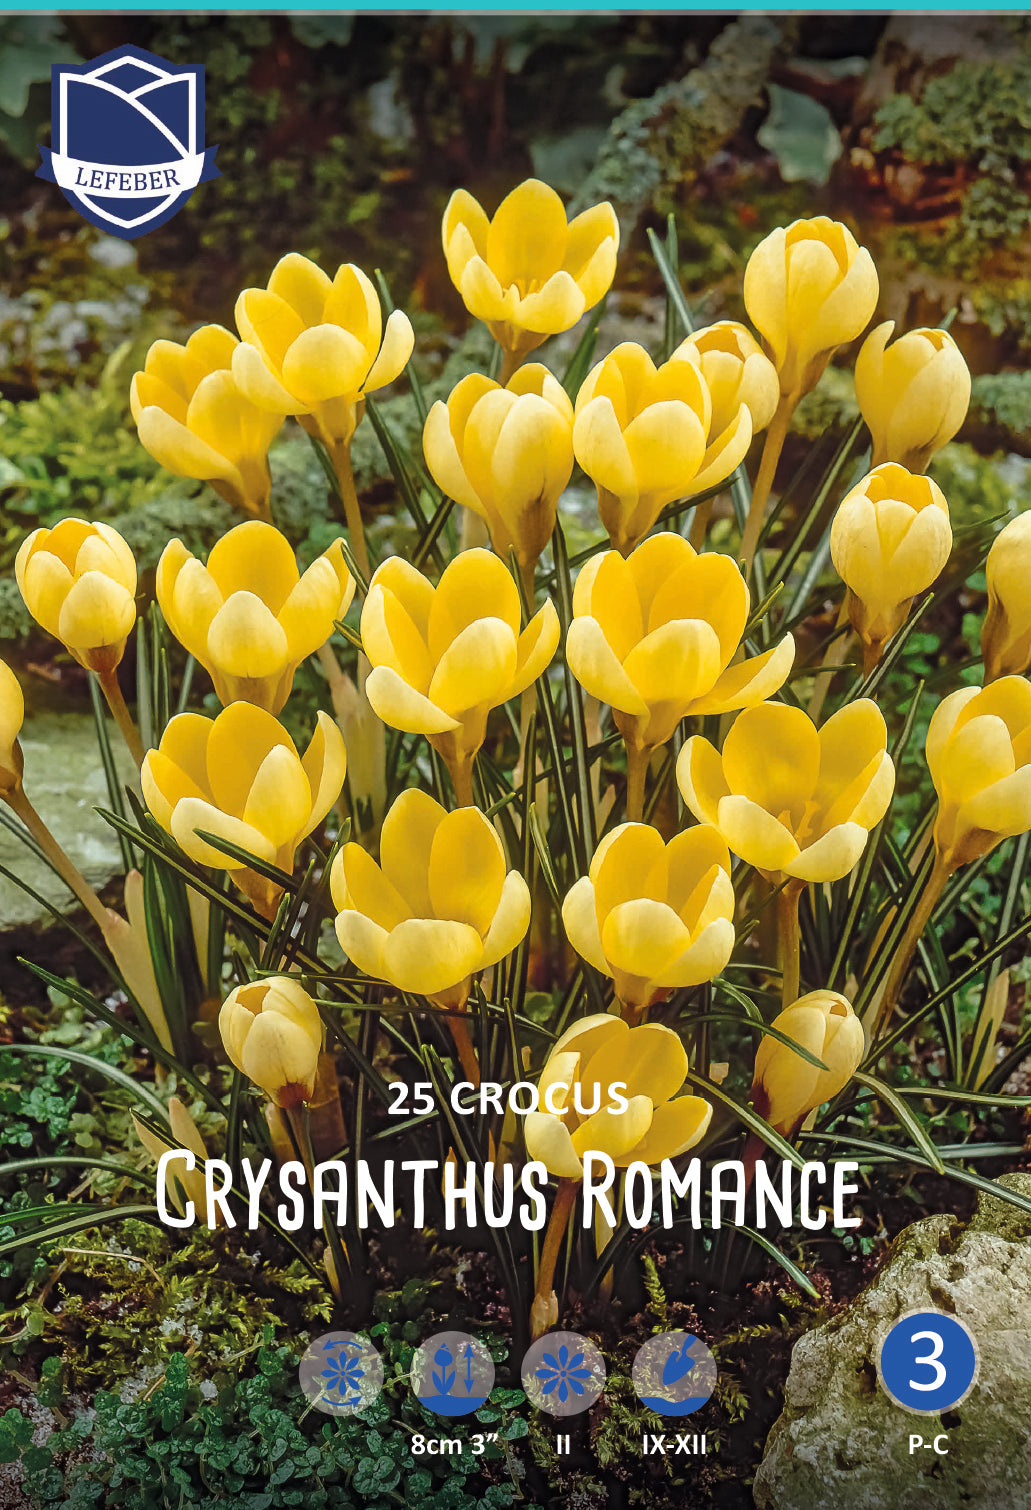 Krokus Crysanthus Romance